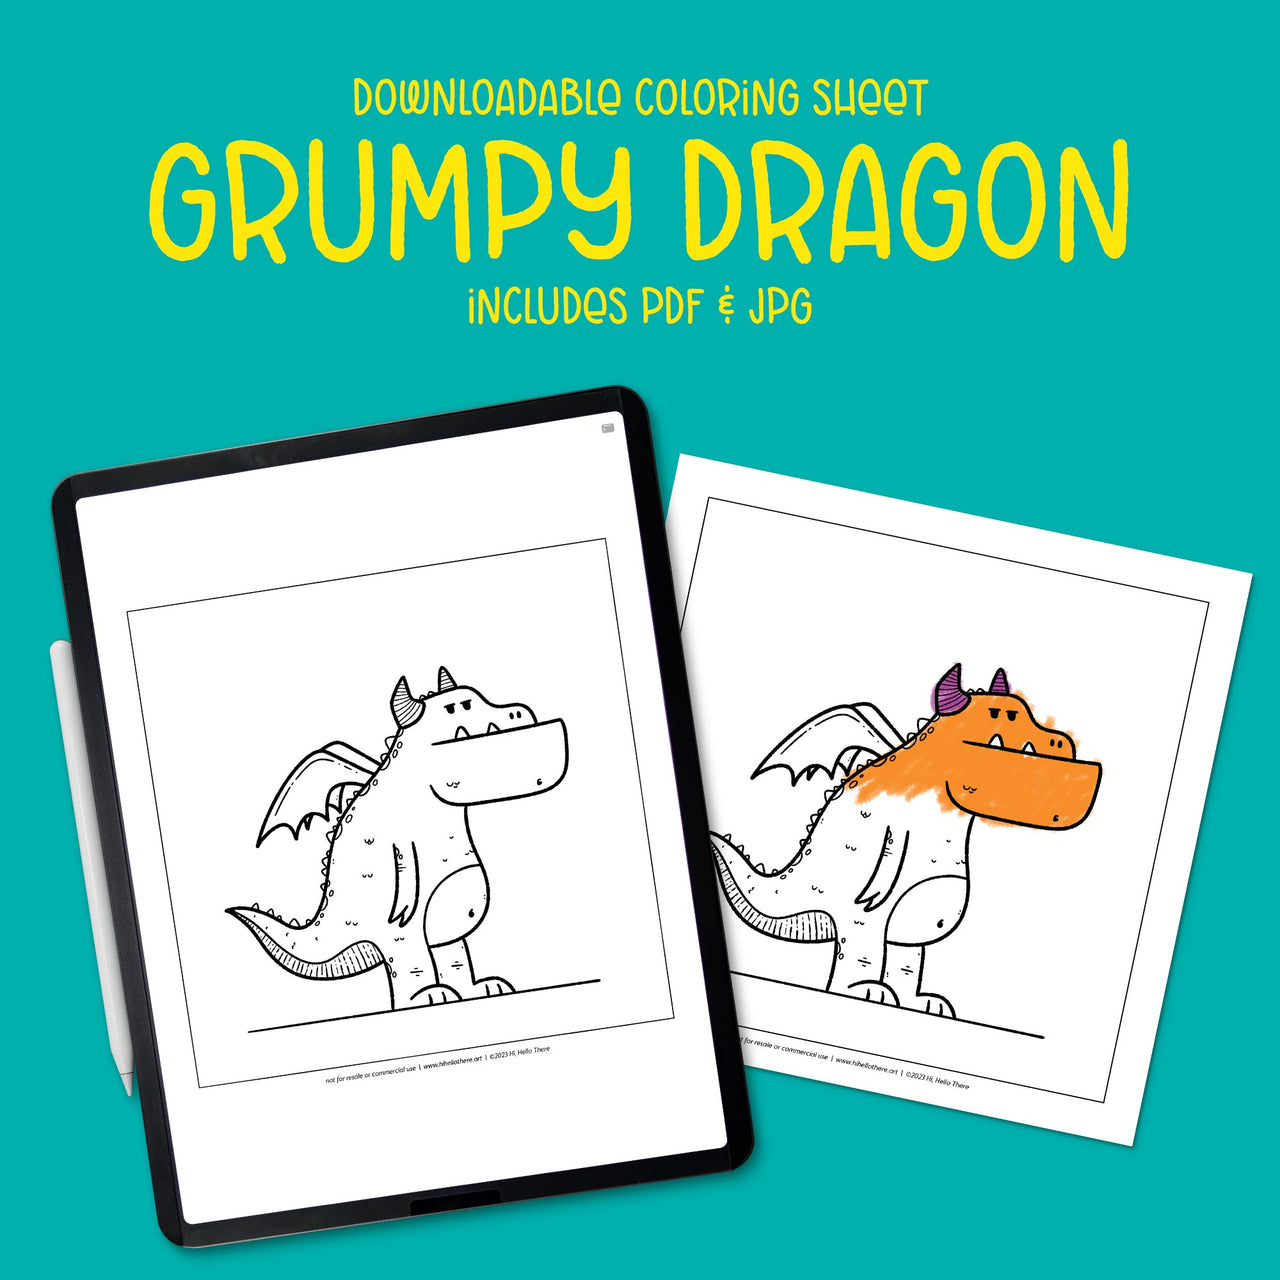 Grumpy Dragon Downloadable Coloring Sheet